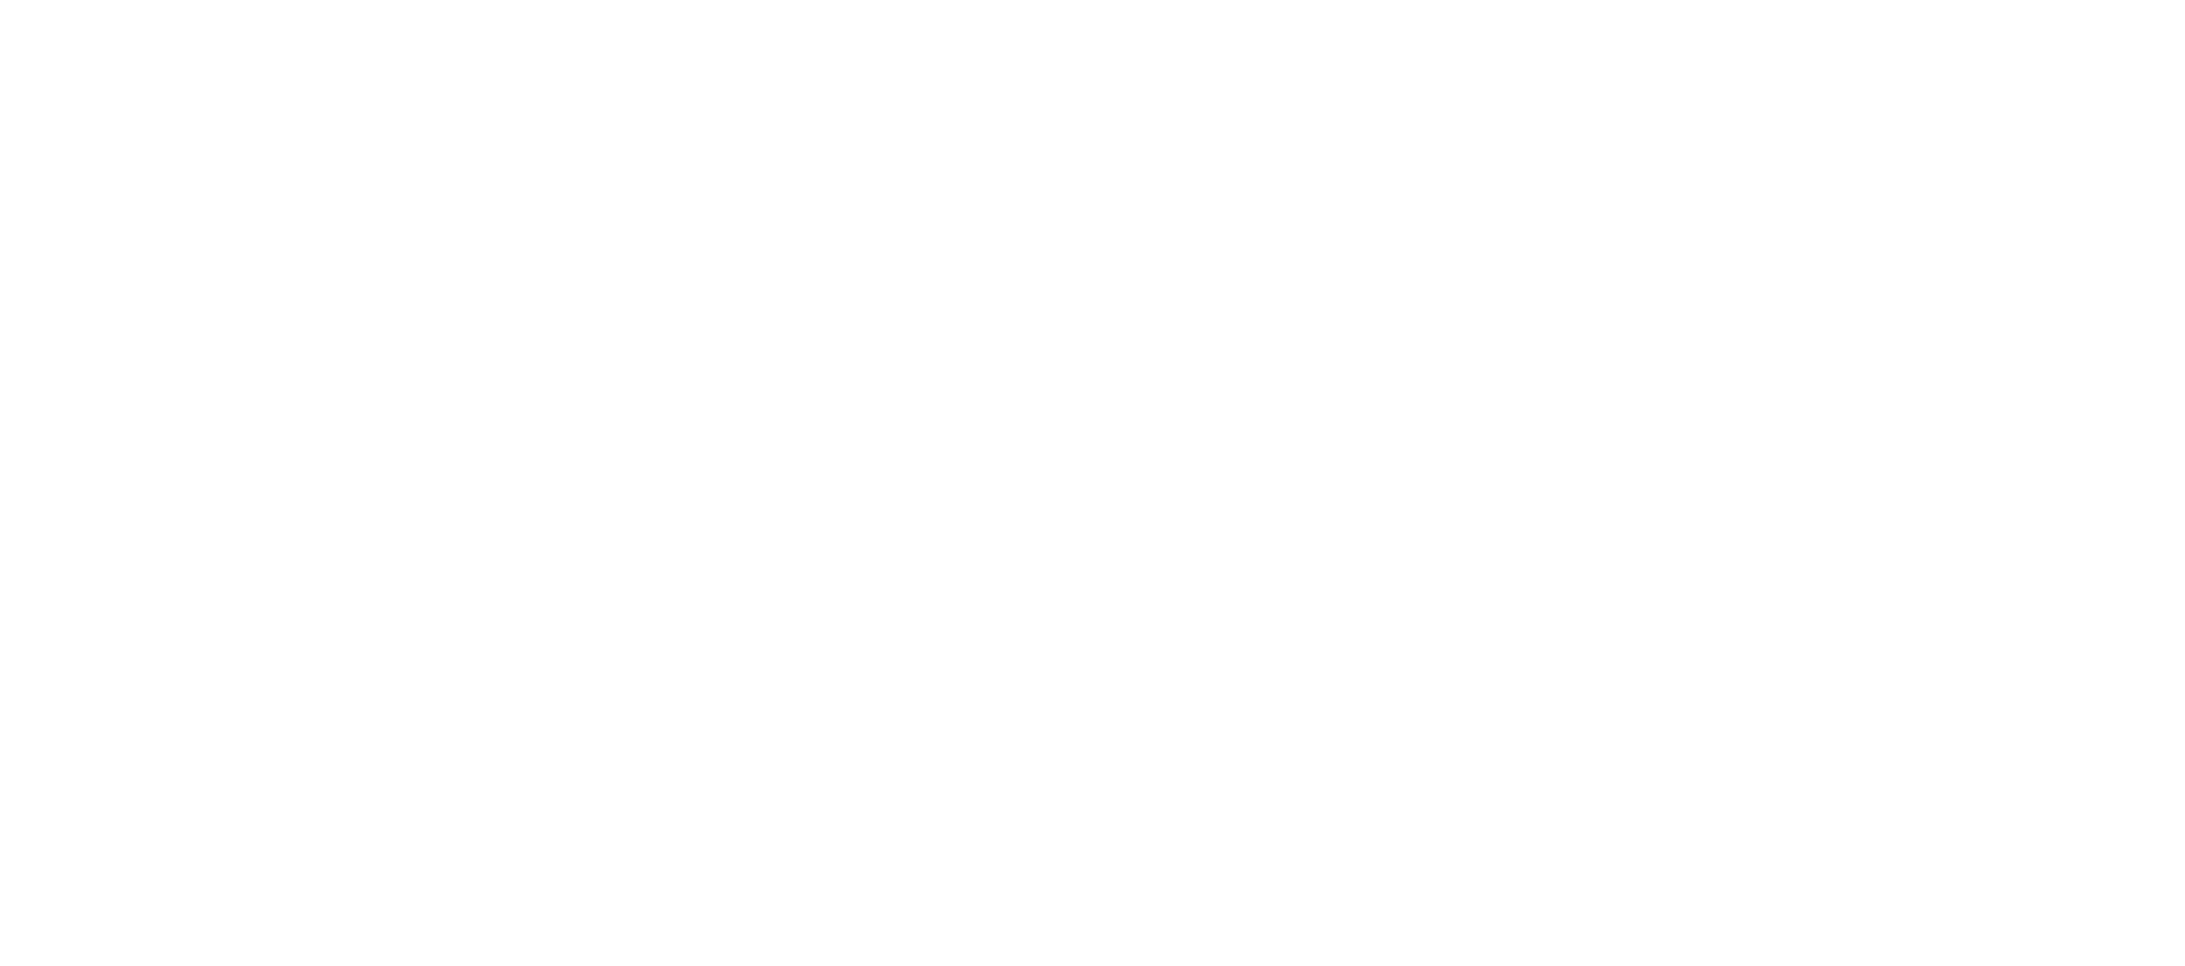 xelerate.tech